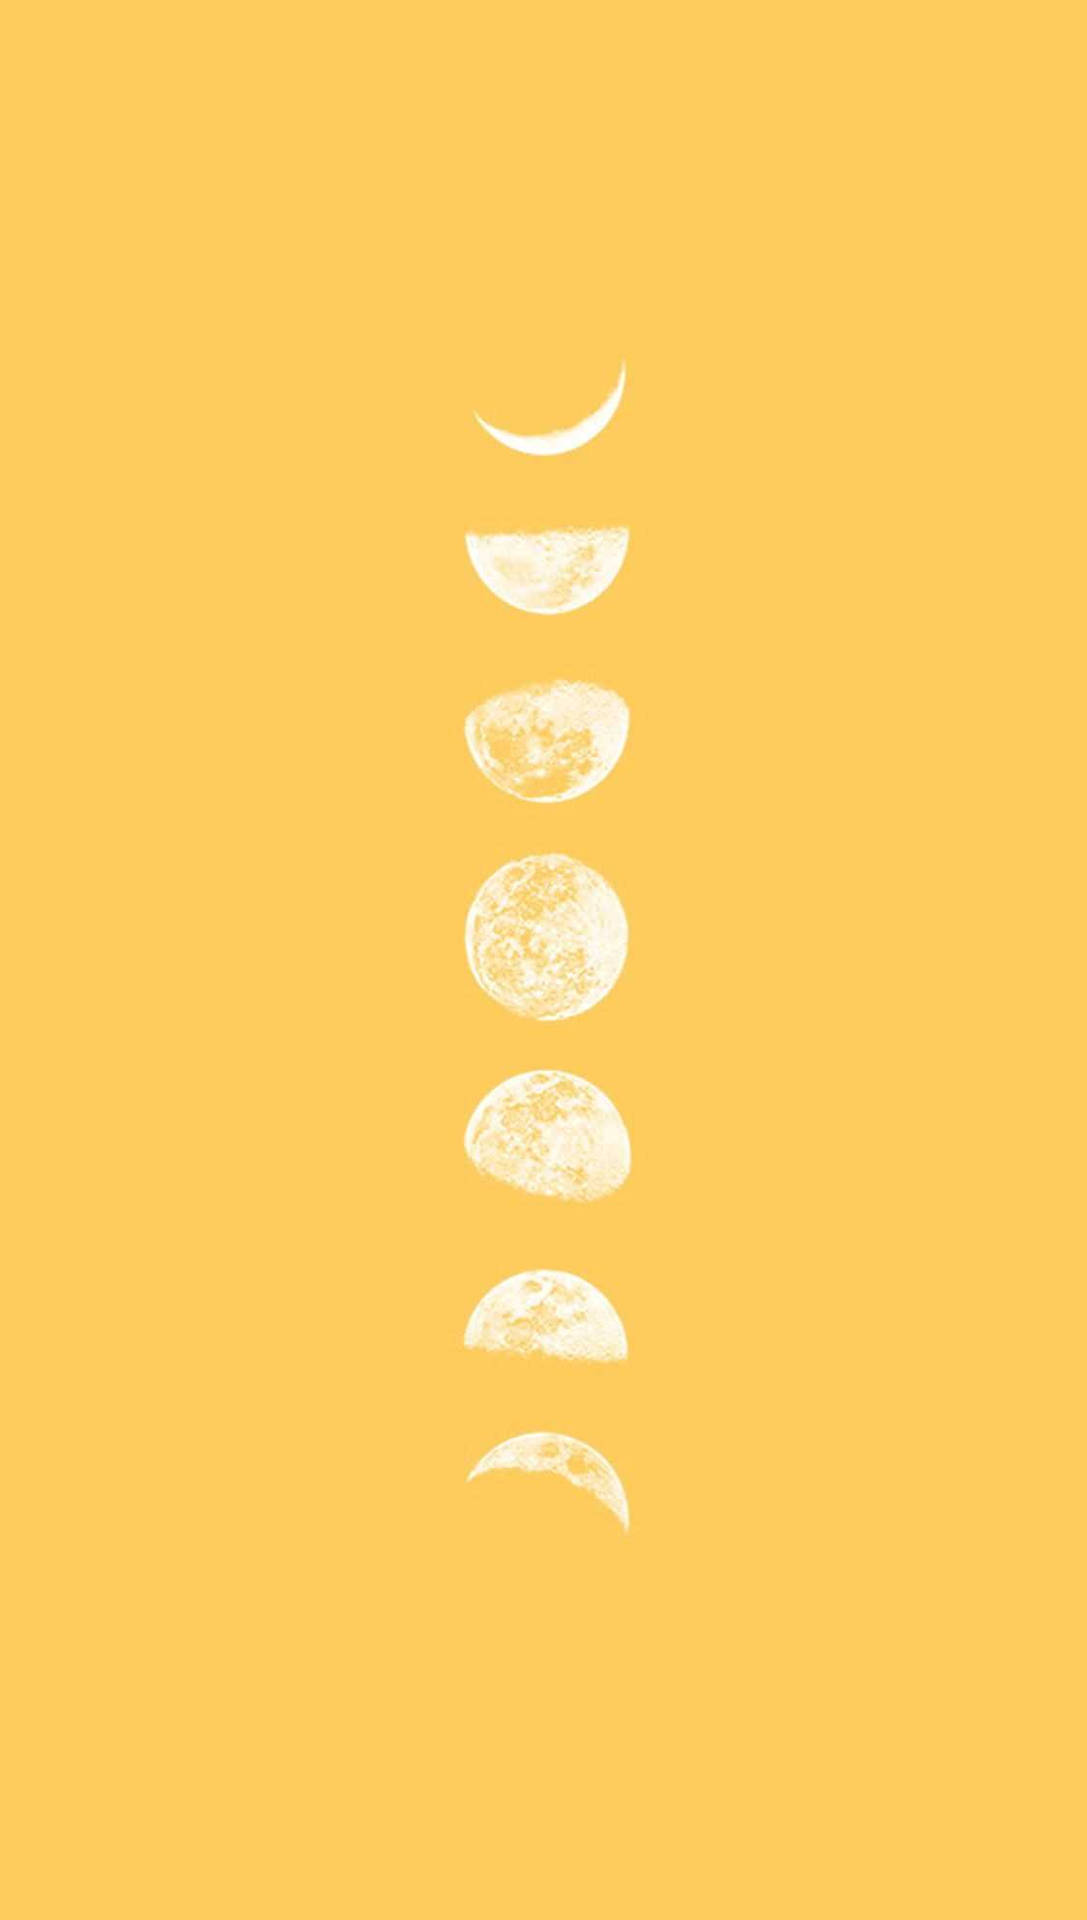 Moon Phase Pastel Yellow Aesthetic